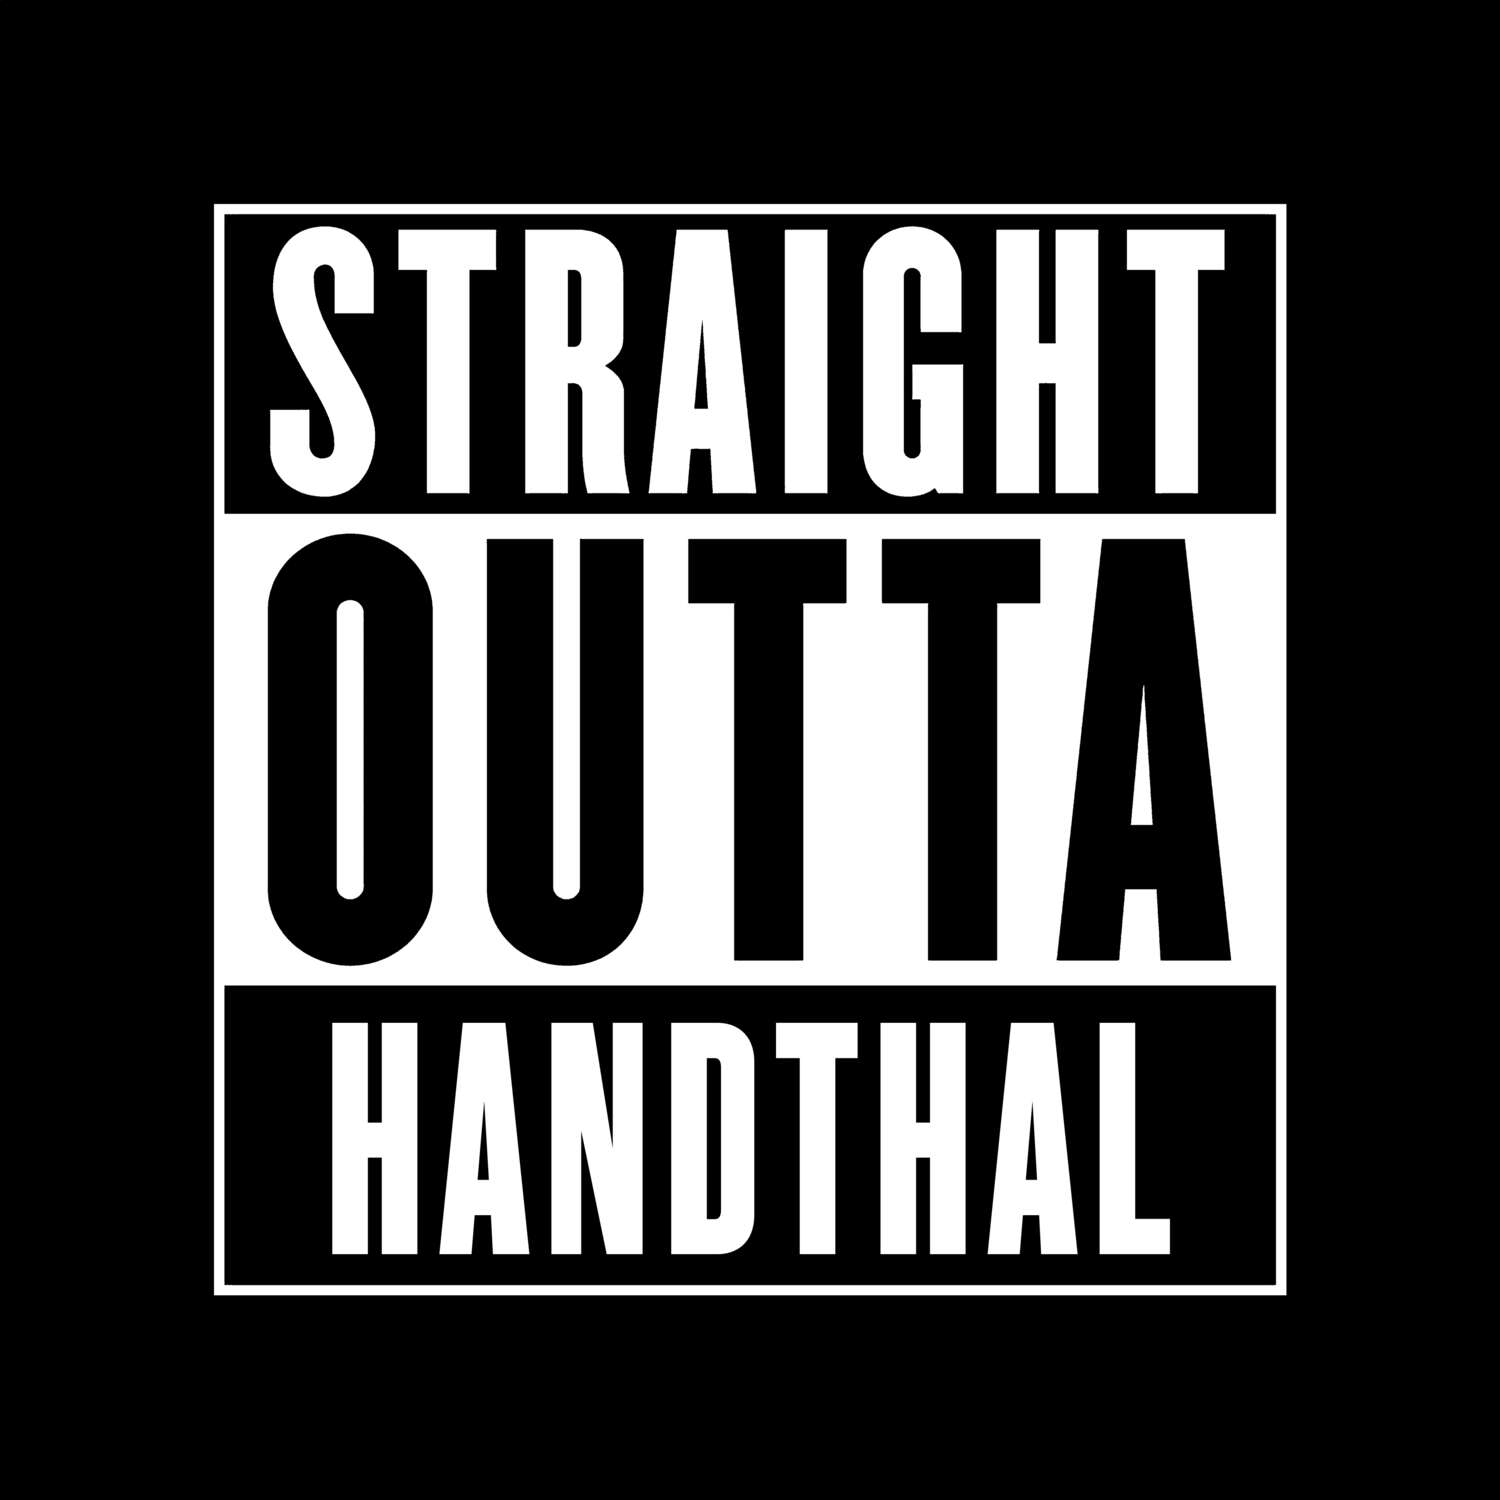 Handthal T-Shirt »Straight Outta«